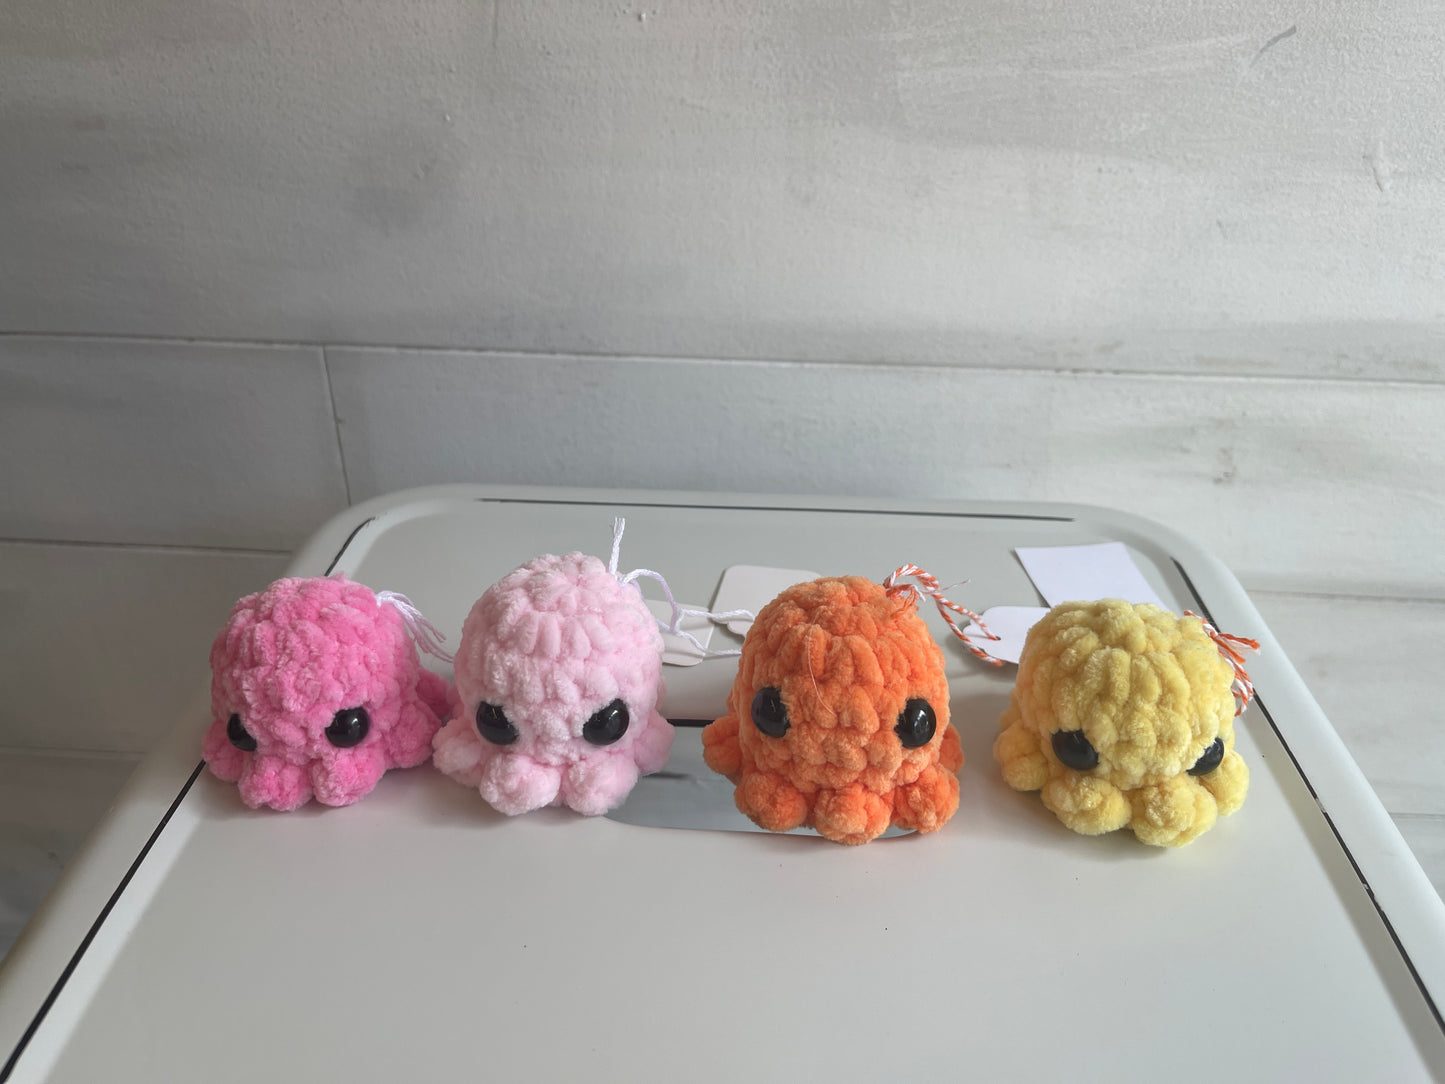 Crochet Mini Octopus